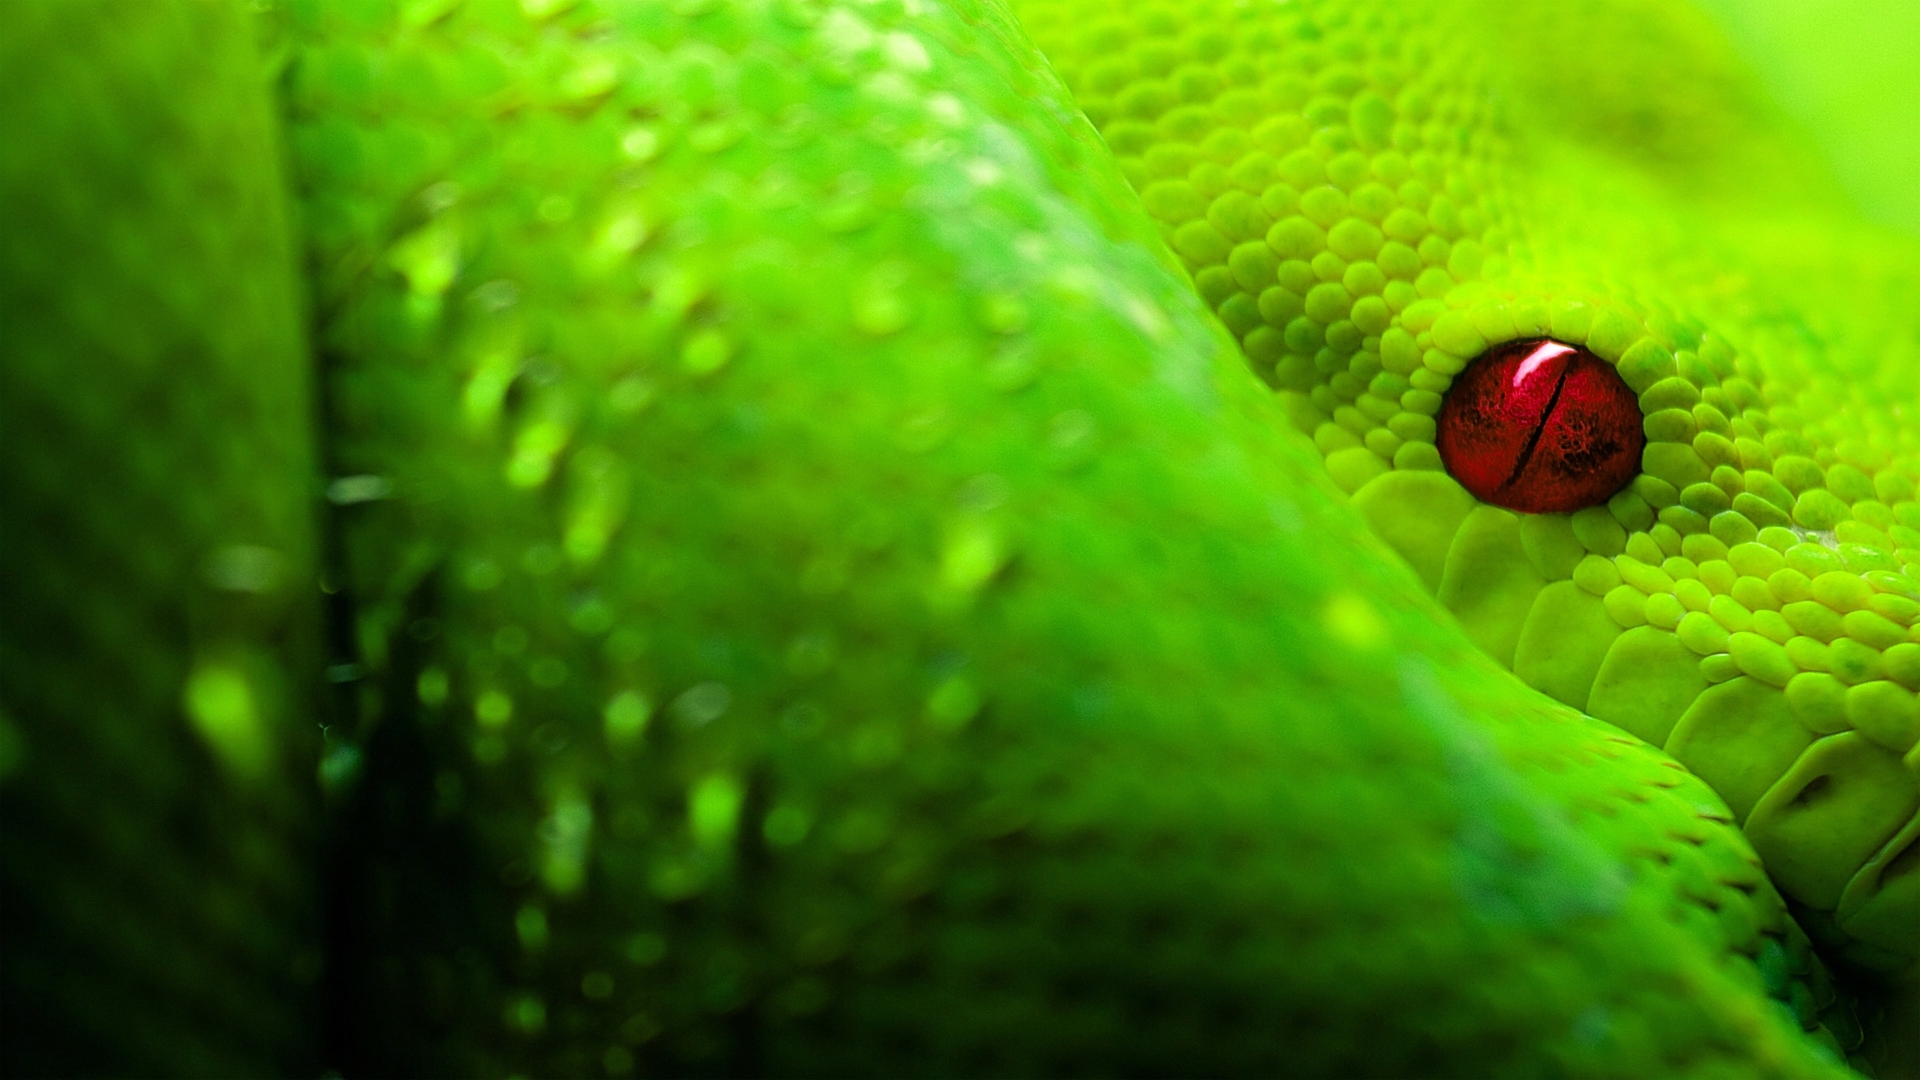 A mesmerizing green boa snake with captivating patterns slithering through its habitat.